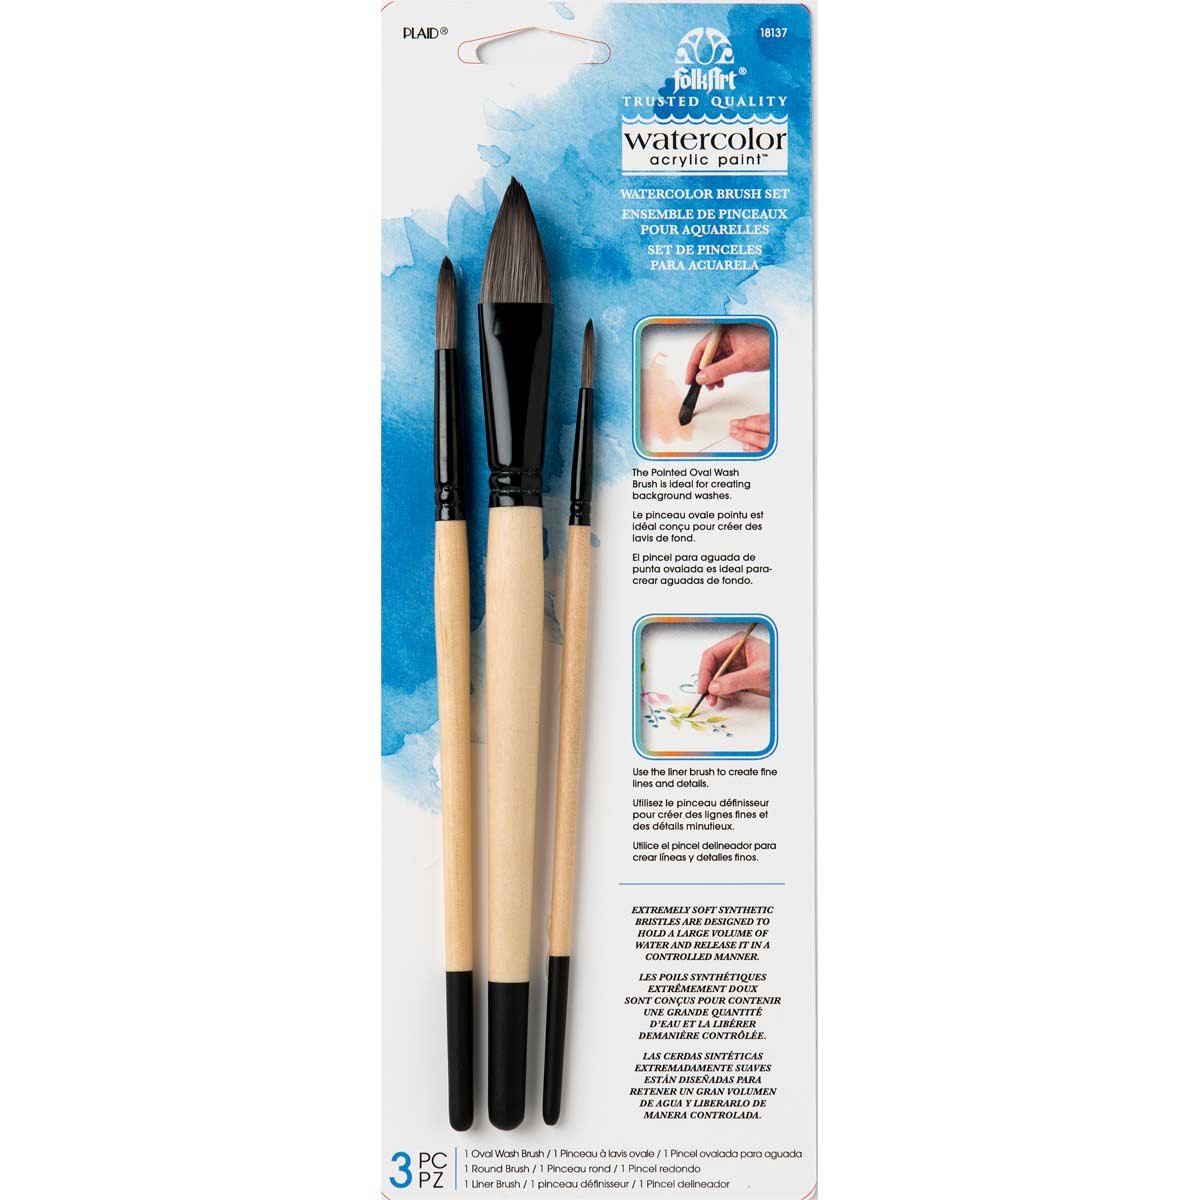 FolkArt ® Watercolor Acrylic Paint™ Brush Sets - Watercolor Brush Set, 3 pc. - 18137